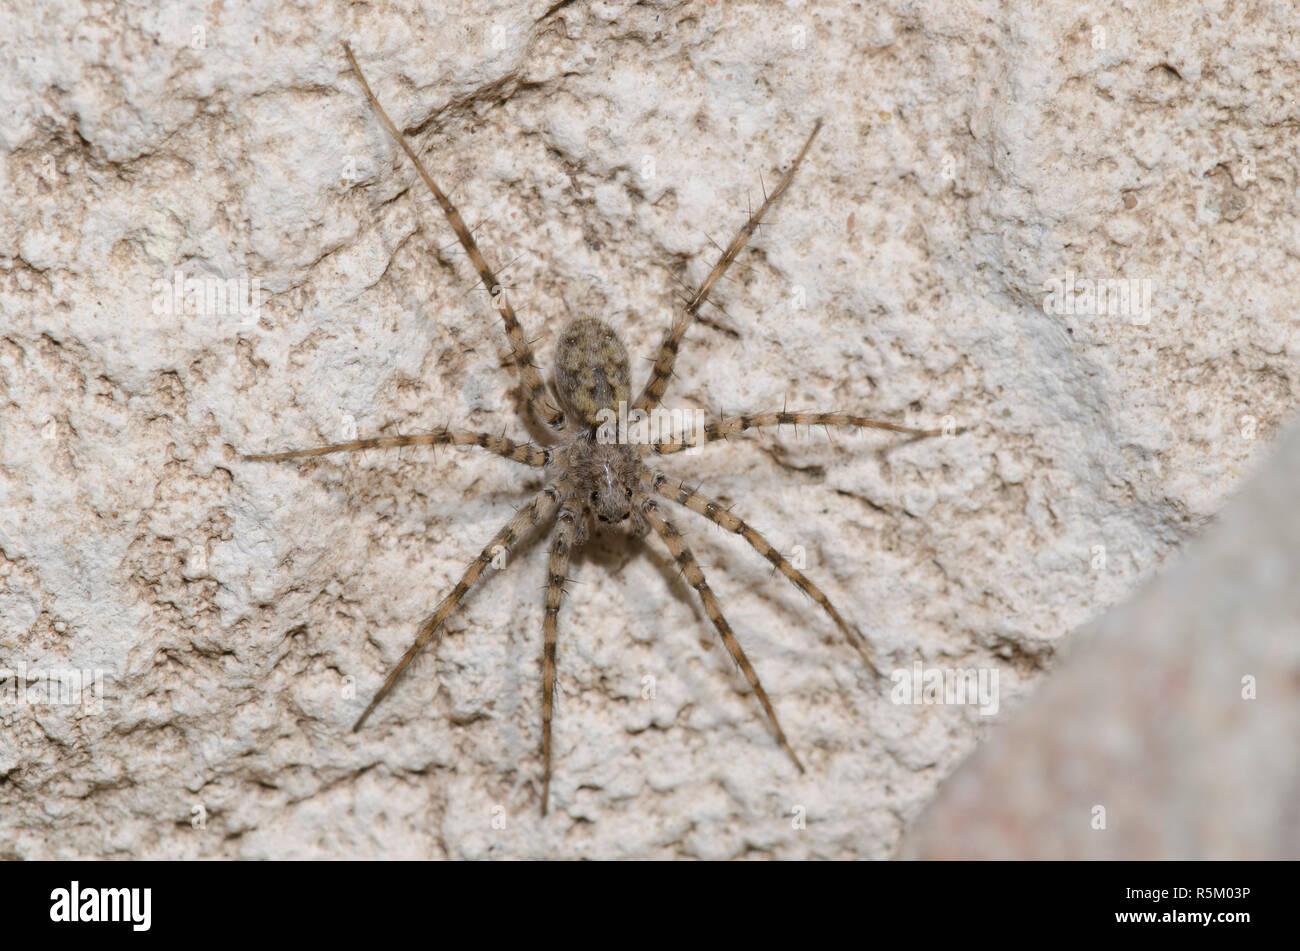 Thinlegged Wolf Spider, Pardosa sp. Stockfoto